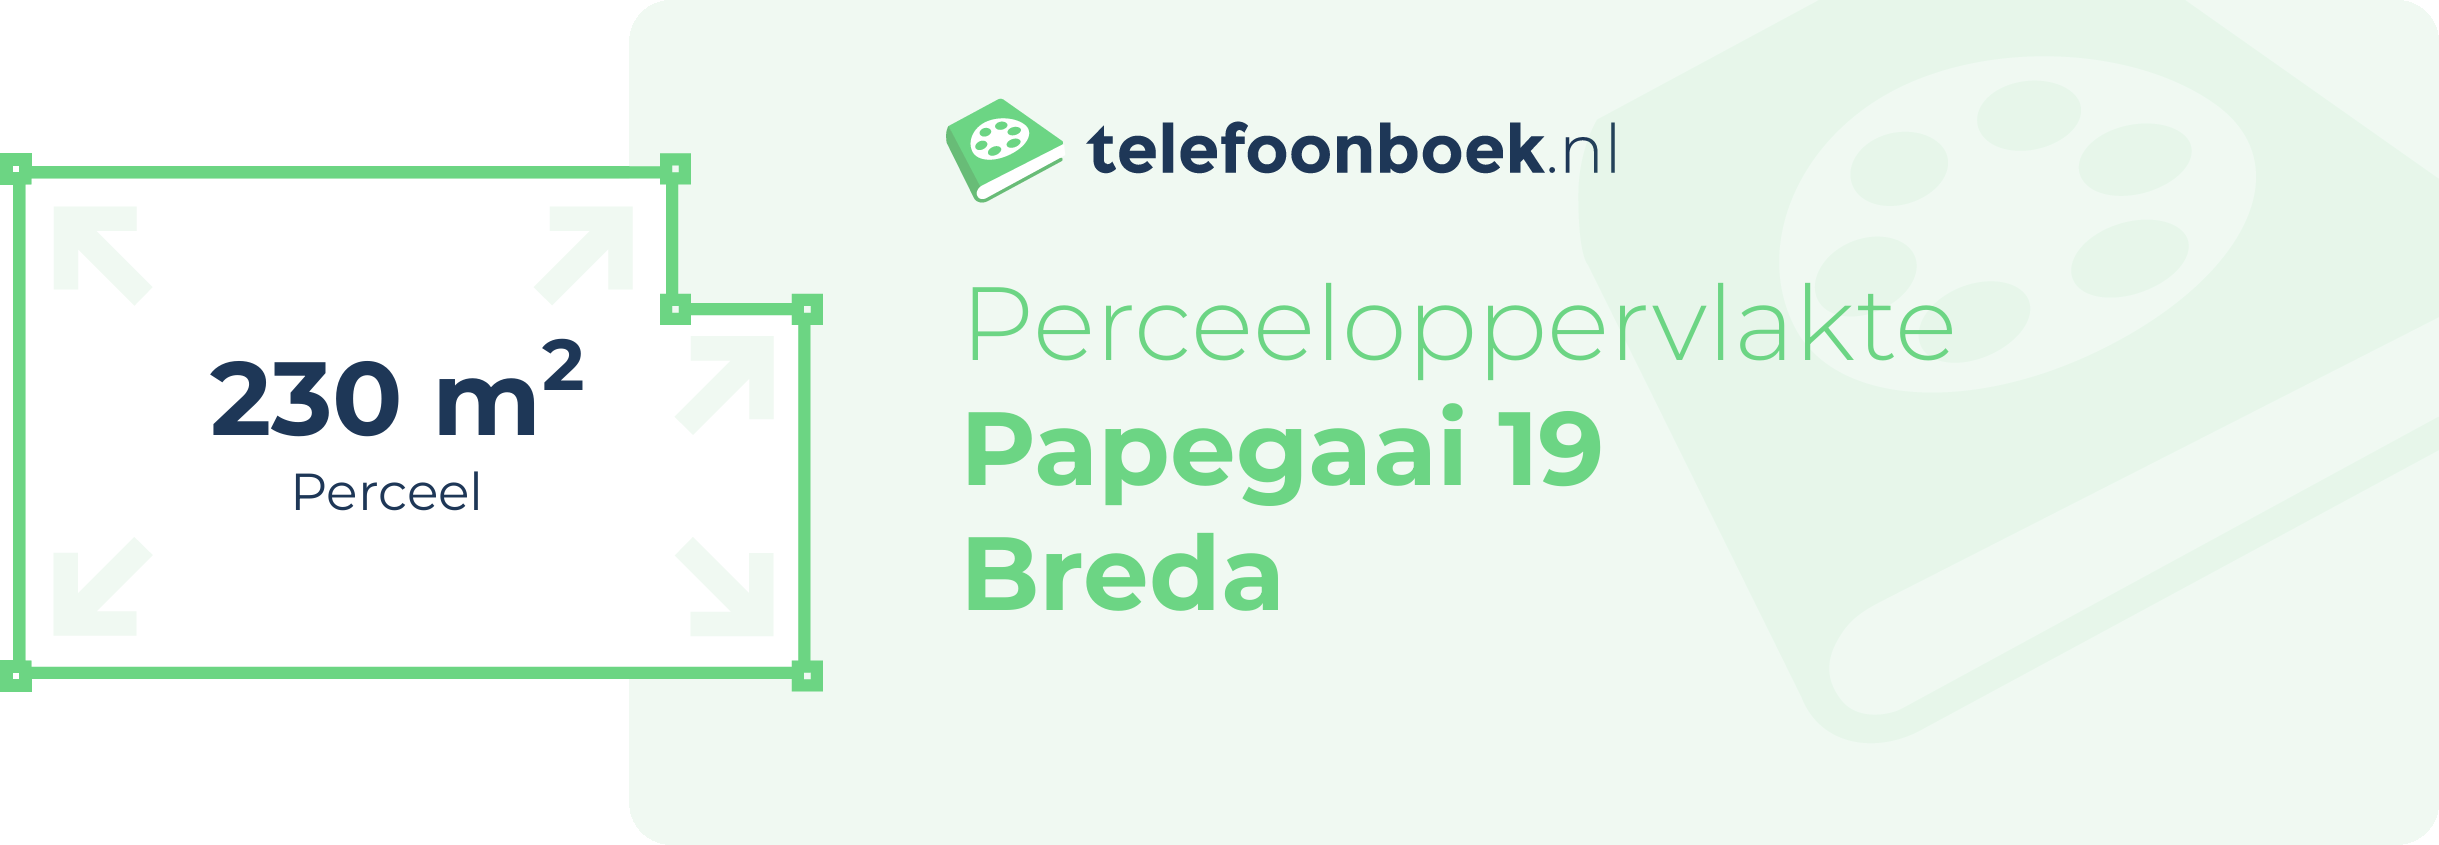 Perceeloppervlakte Papegaai 19 Breda